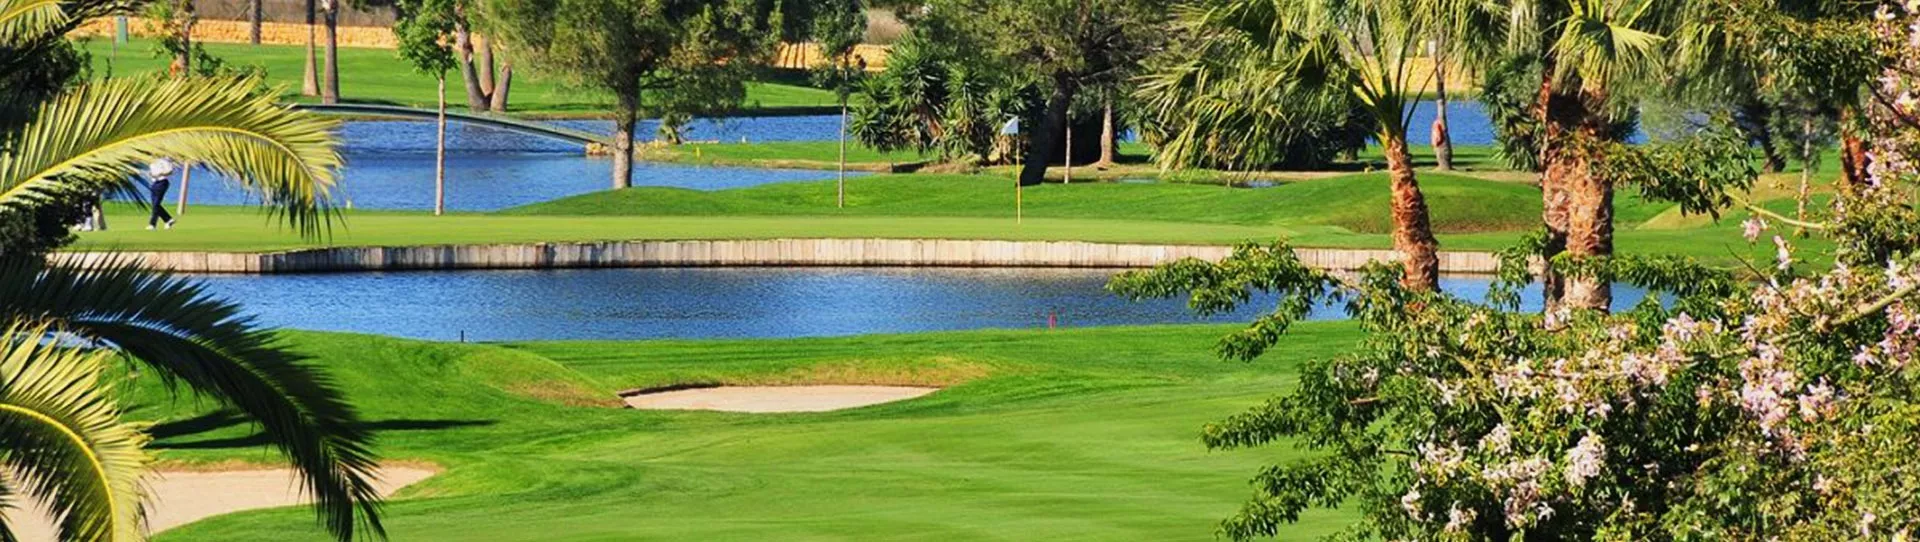 Spain golf courses - Real Club Pineda de Sevilla - Photo 2